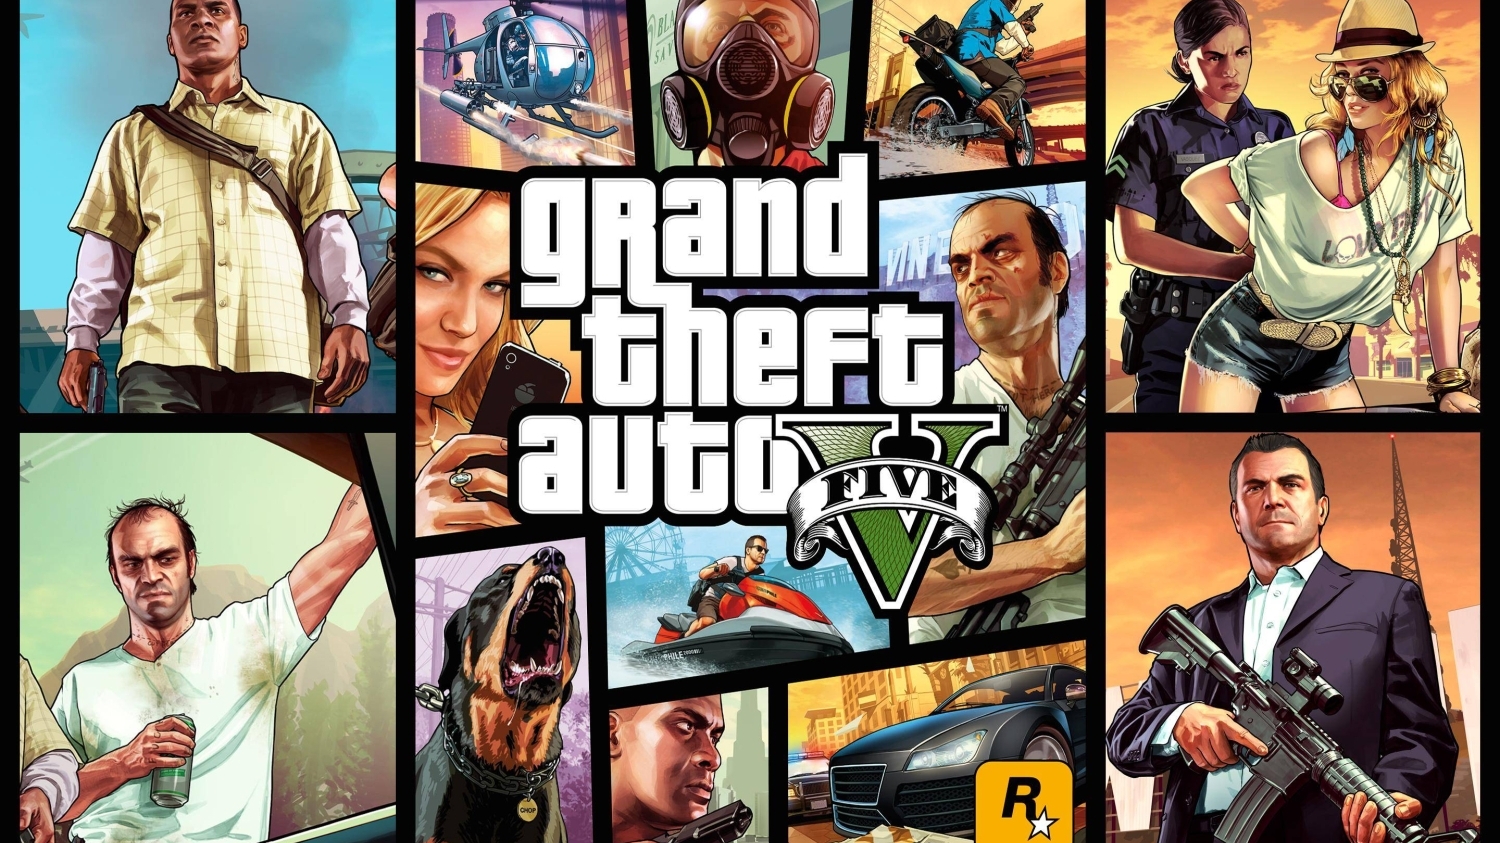  Grand Theft Auto V Xbox One : Take 2 Interactive